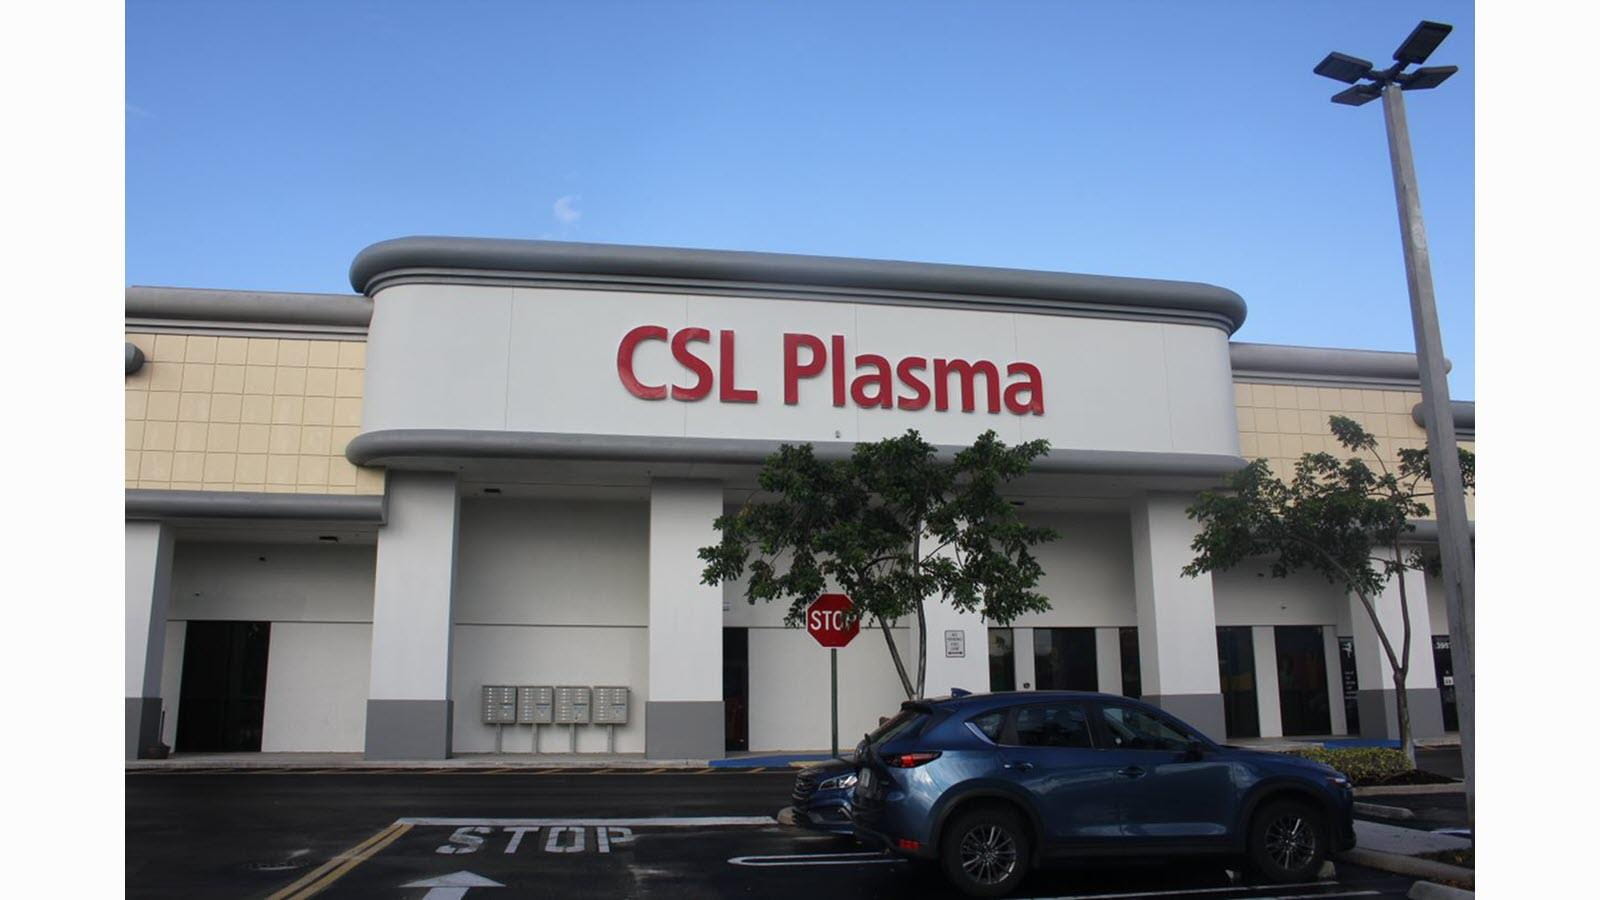 Exterior of new CSL Plasma Center In Greenacres, Florida against a blue sky